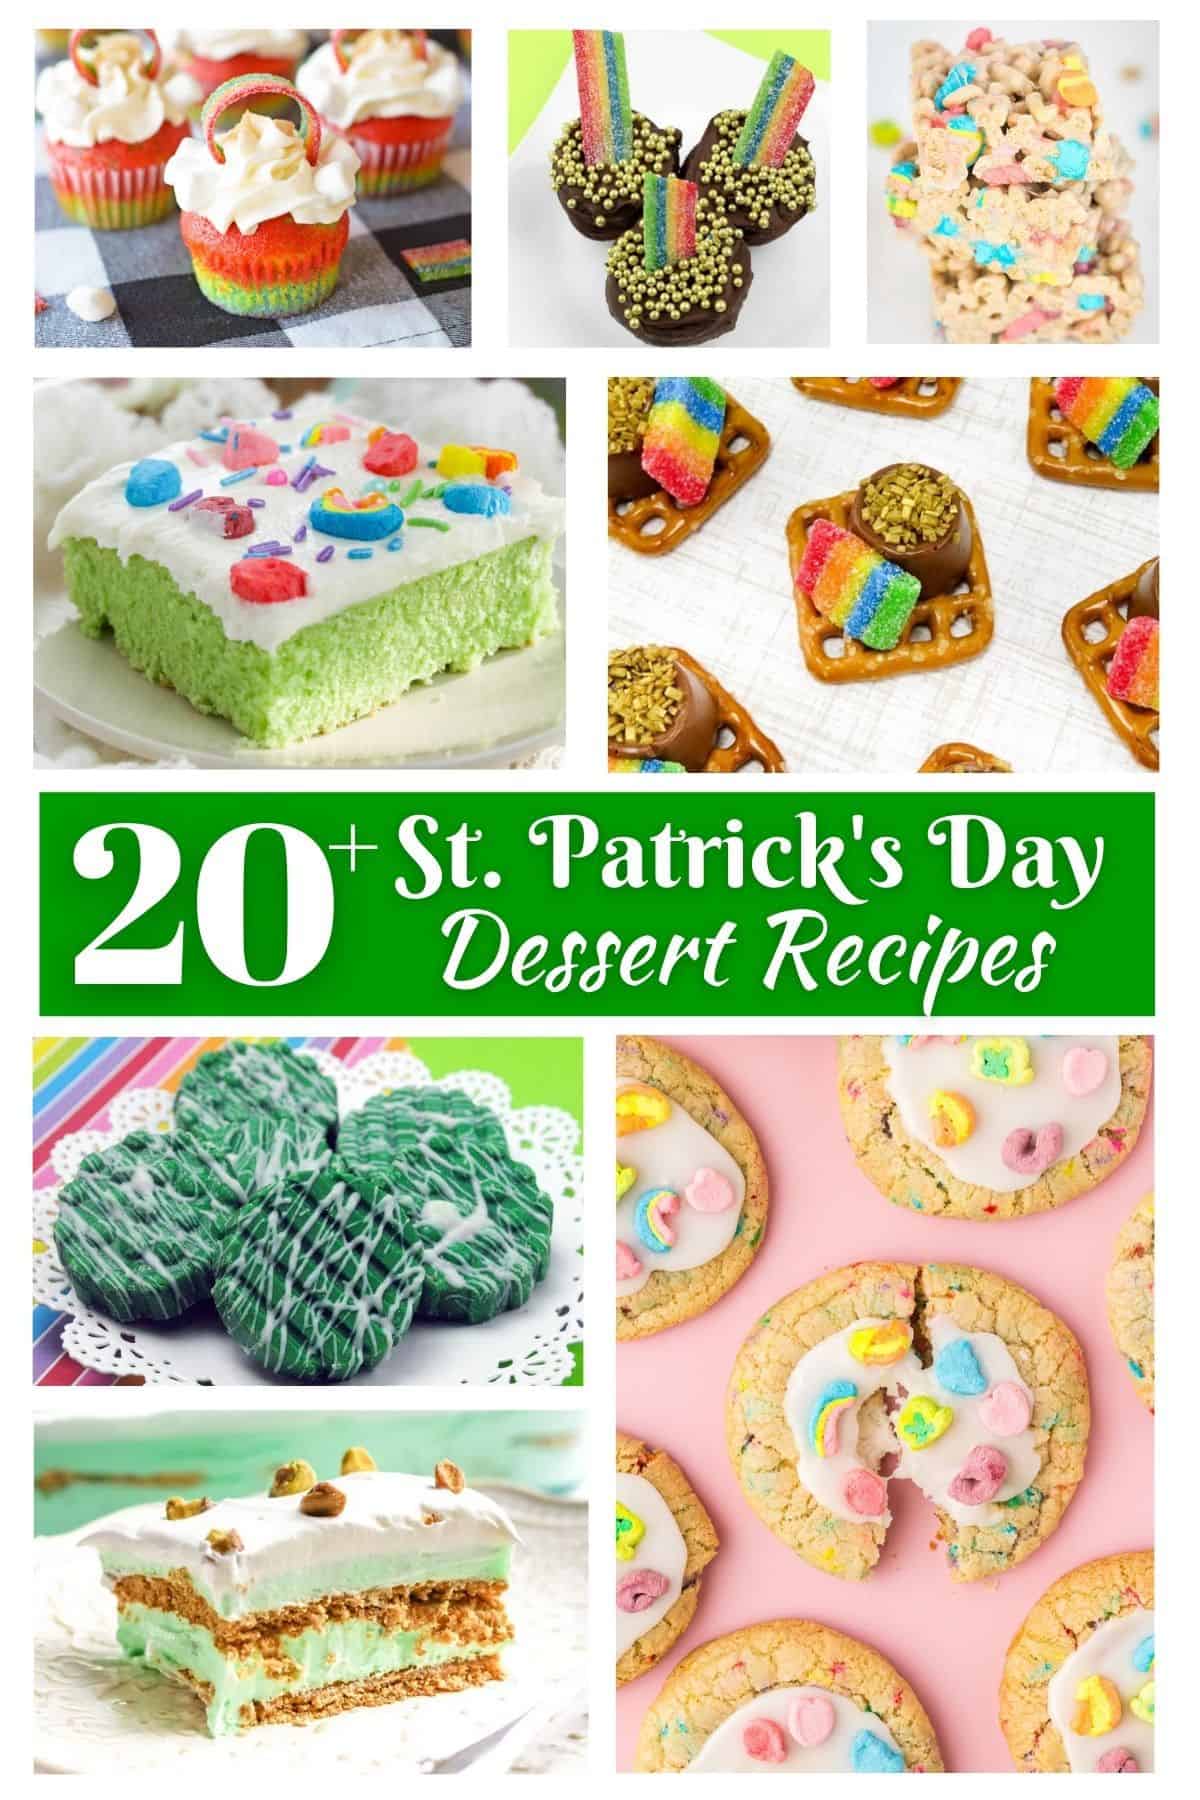 20+ St. Patrick's Day Dessert Recipes